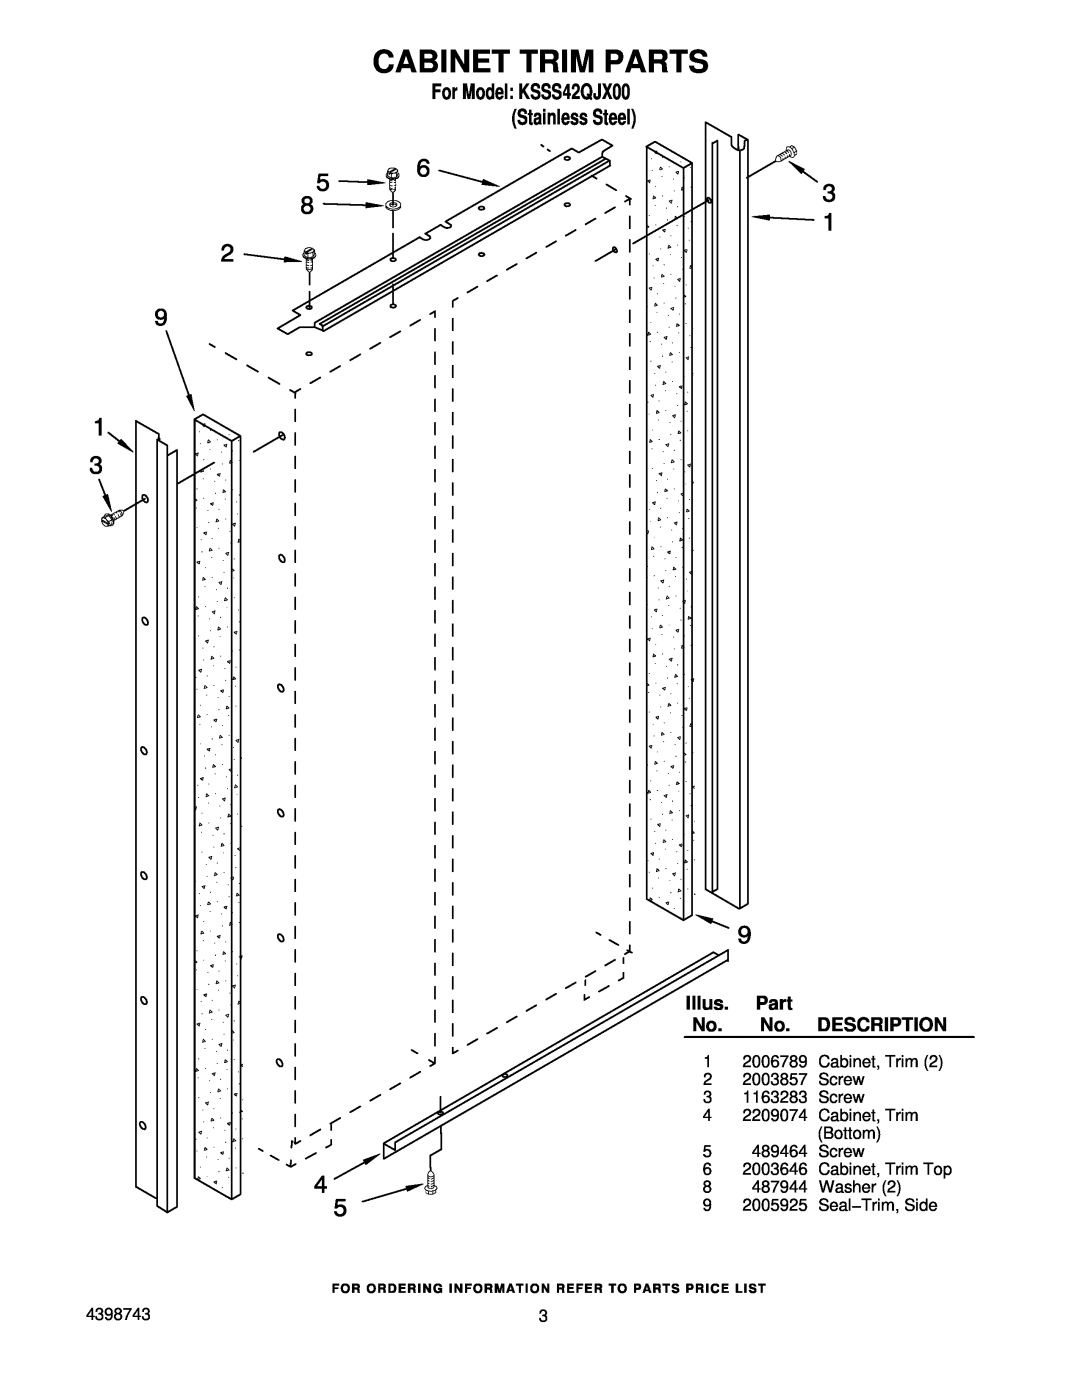 KitchenAid manual Cabinet Trim Parts, For Model KSSS42QJX00 Stainless Steel, Illus, Description 